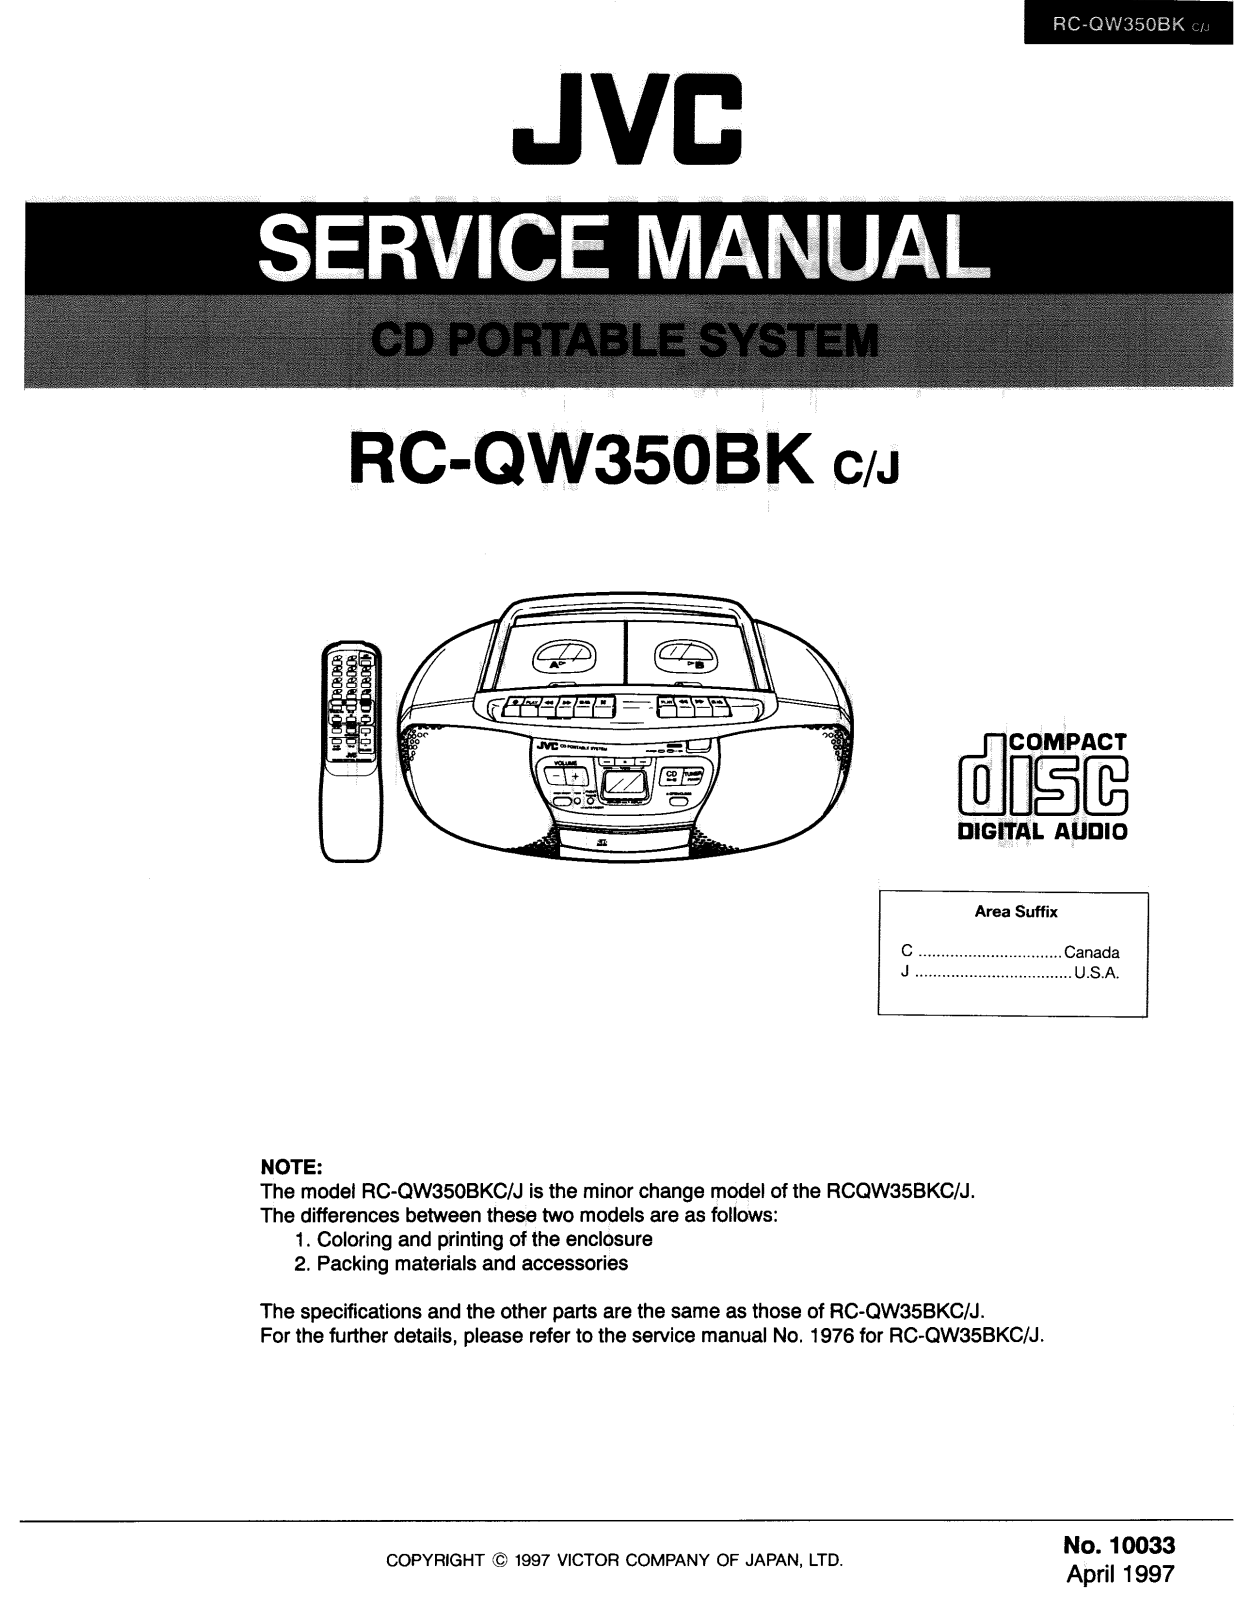 JVC RCQW-350-BK Service manual